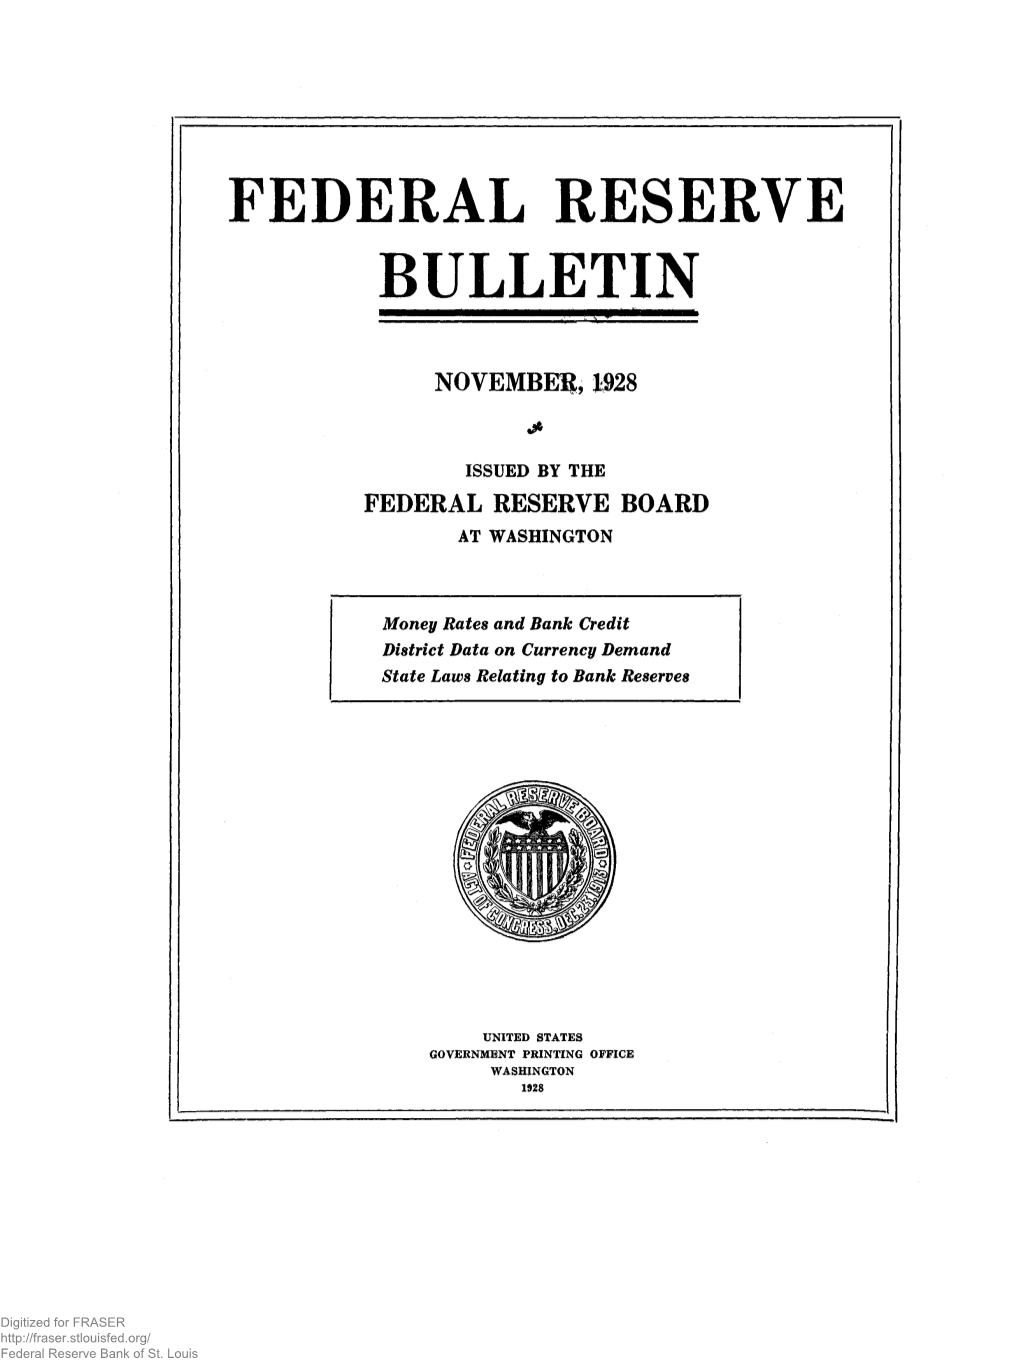 Federal Reserve Bulletin November 1928